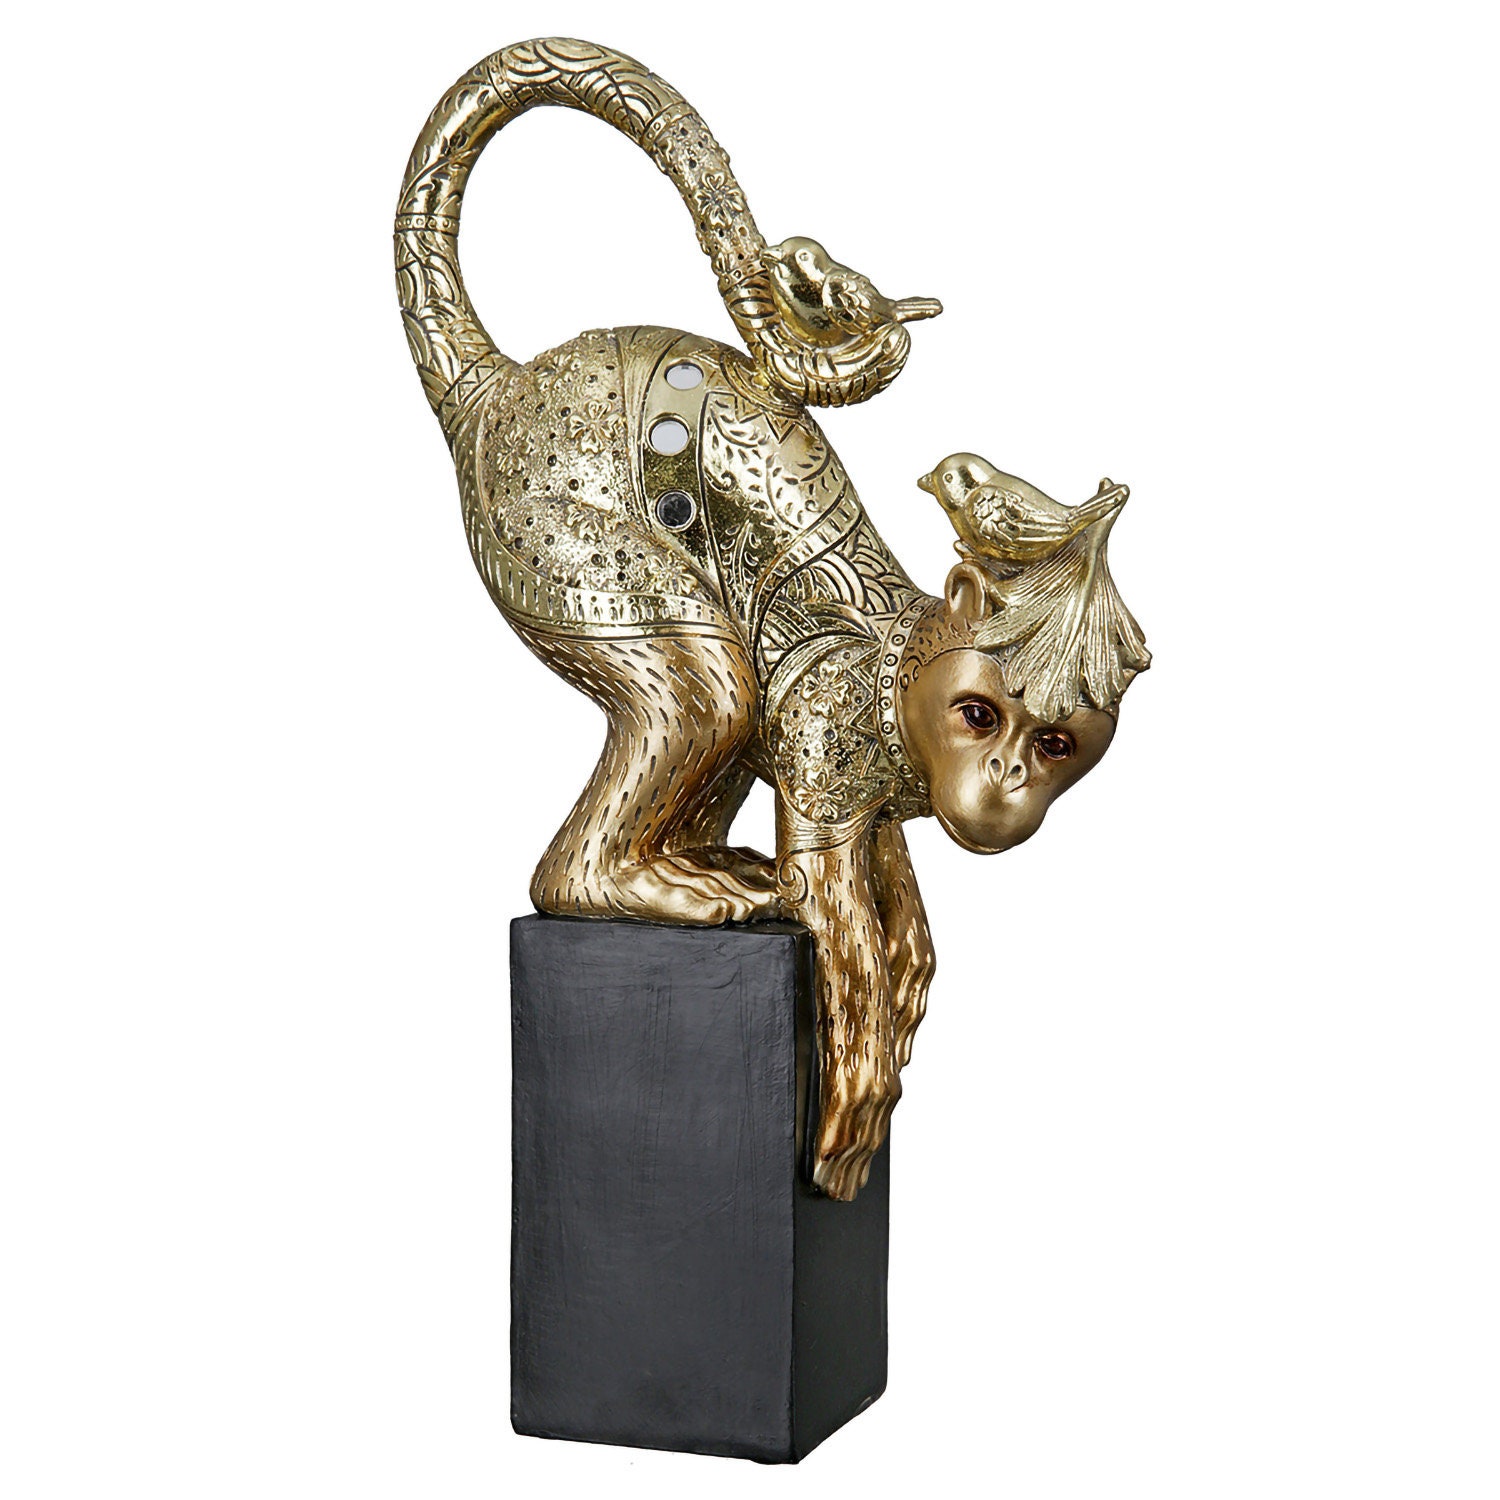 Gold monkey statue